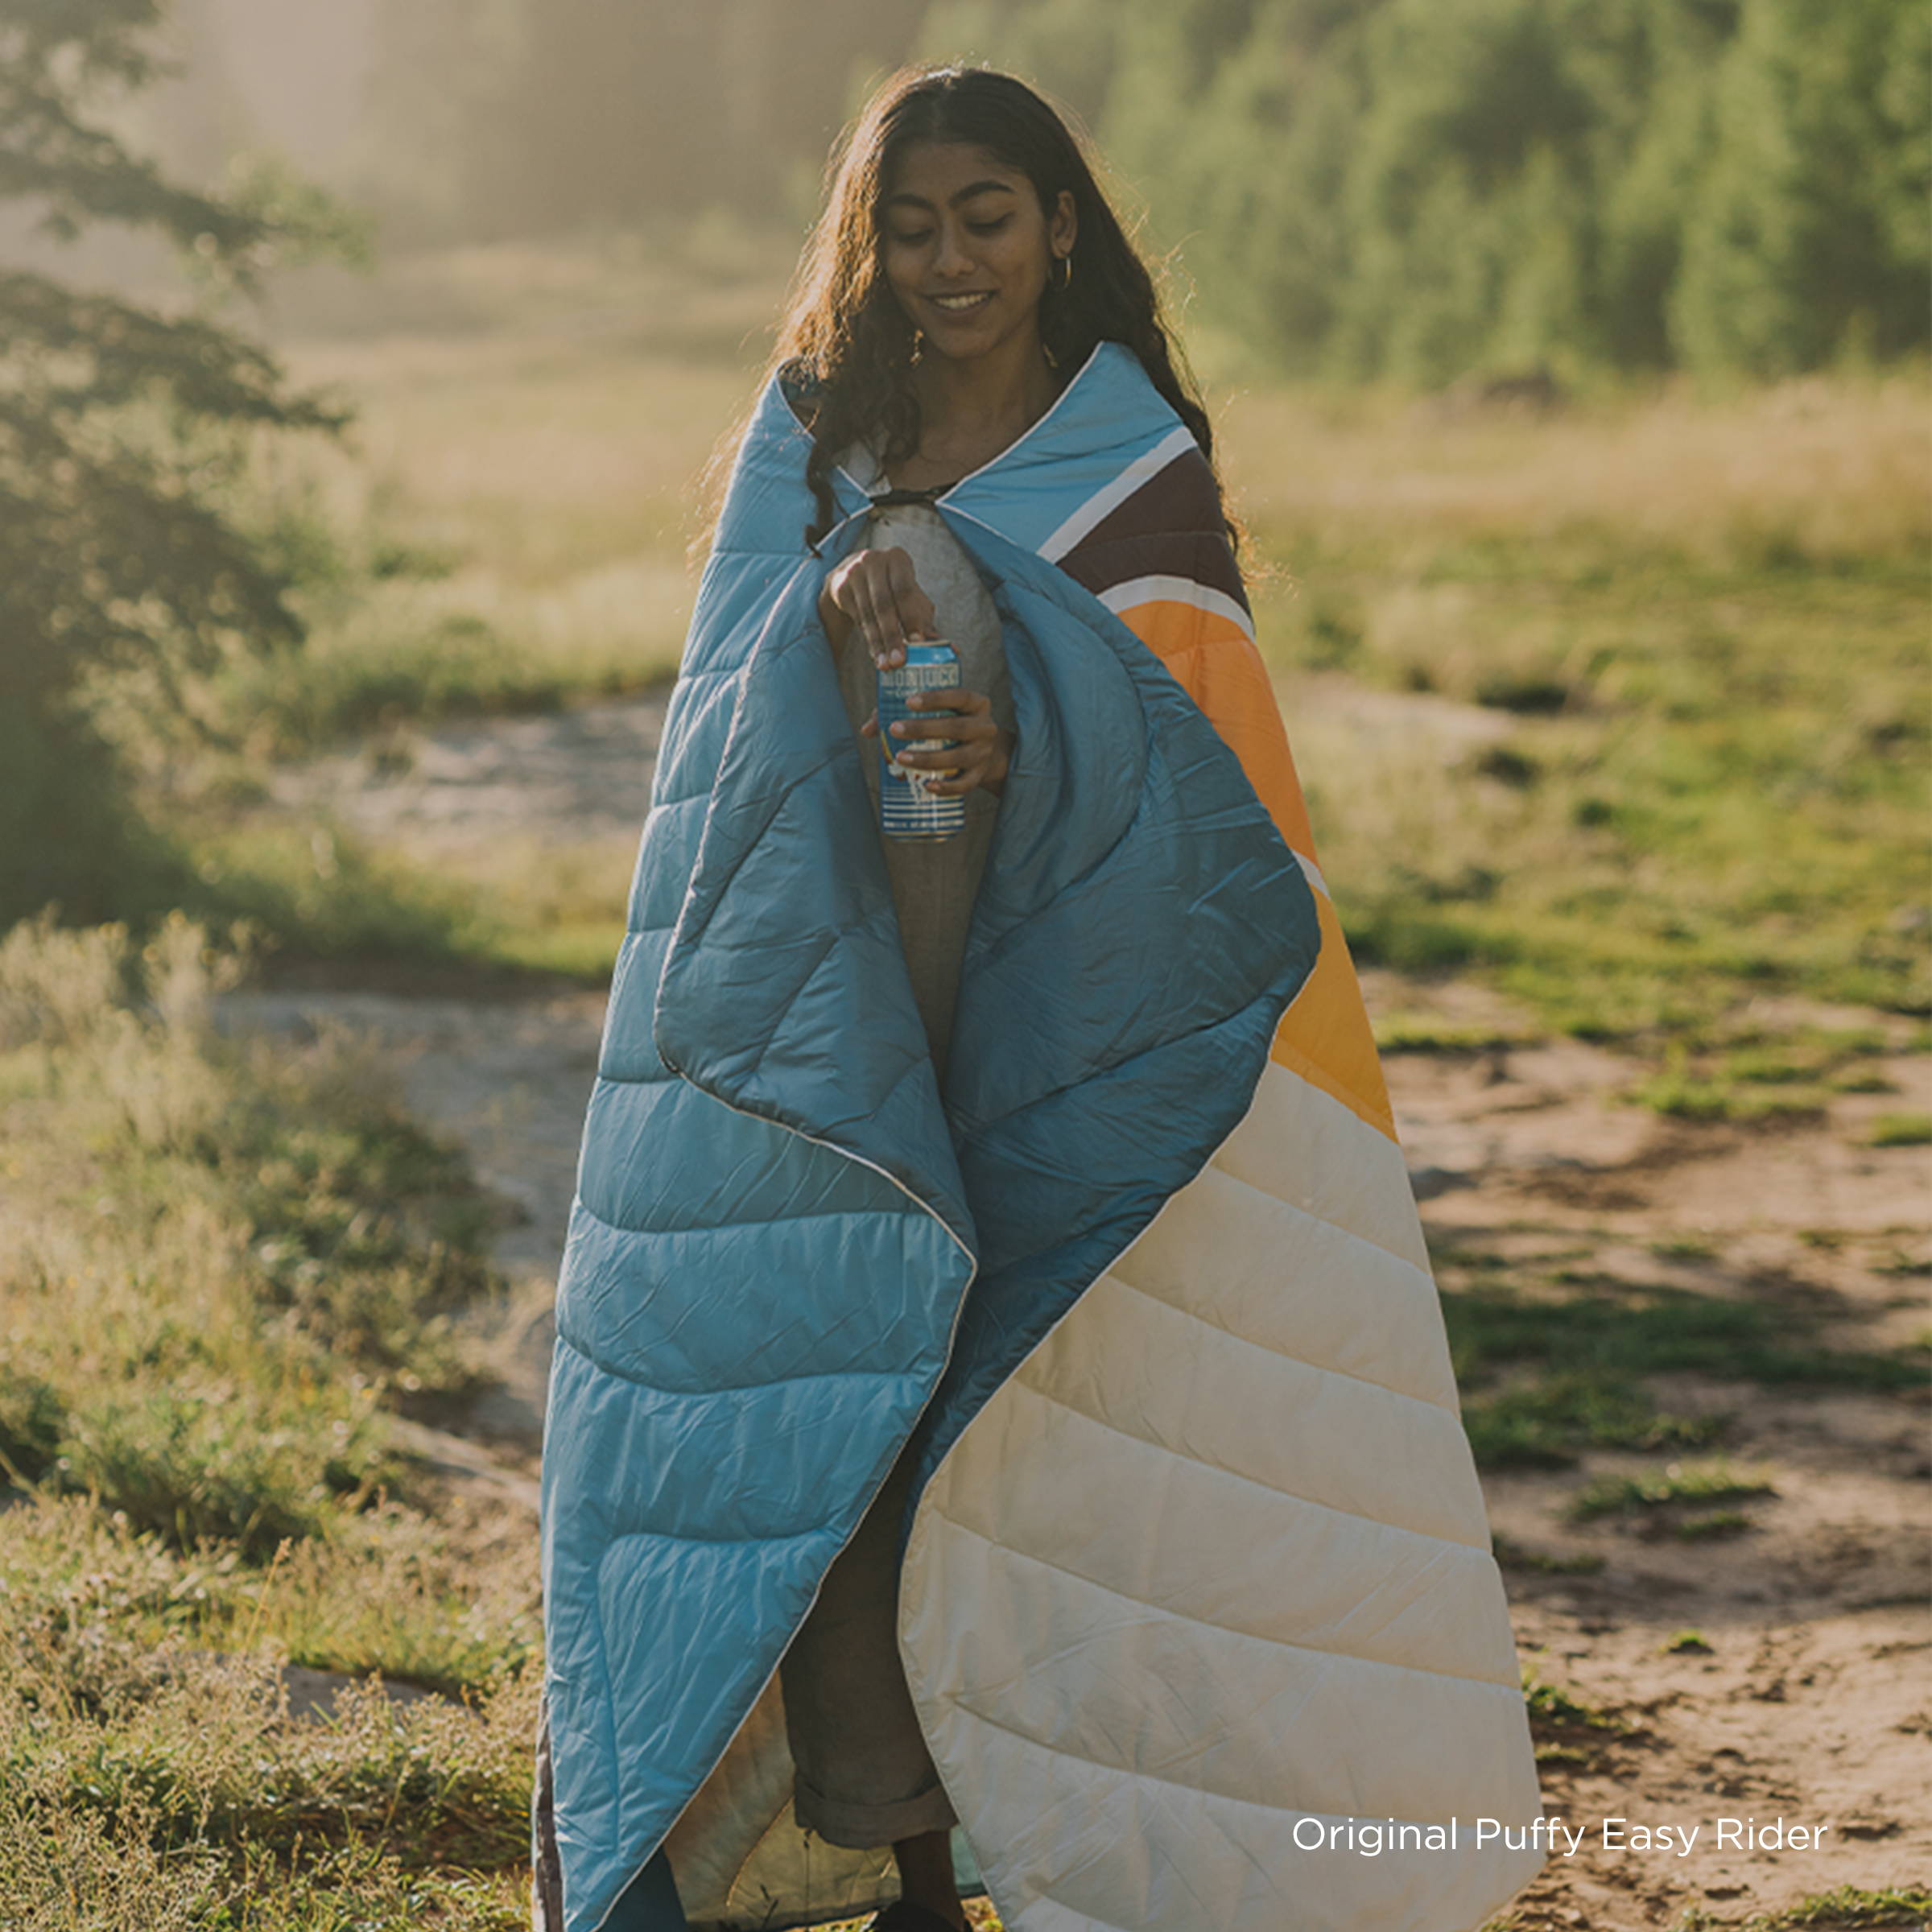 Person wearing Rumpl blanket in nature